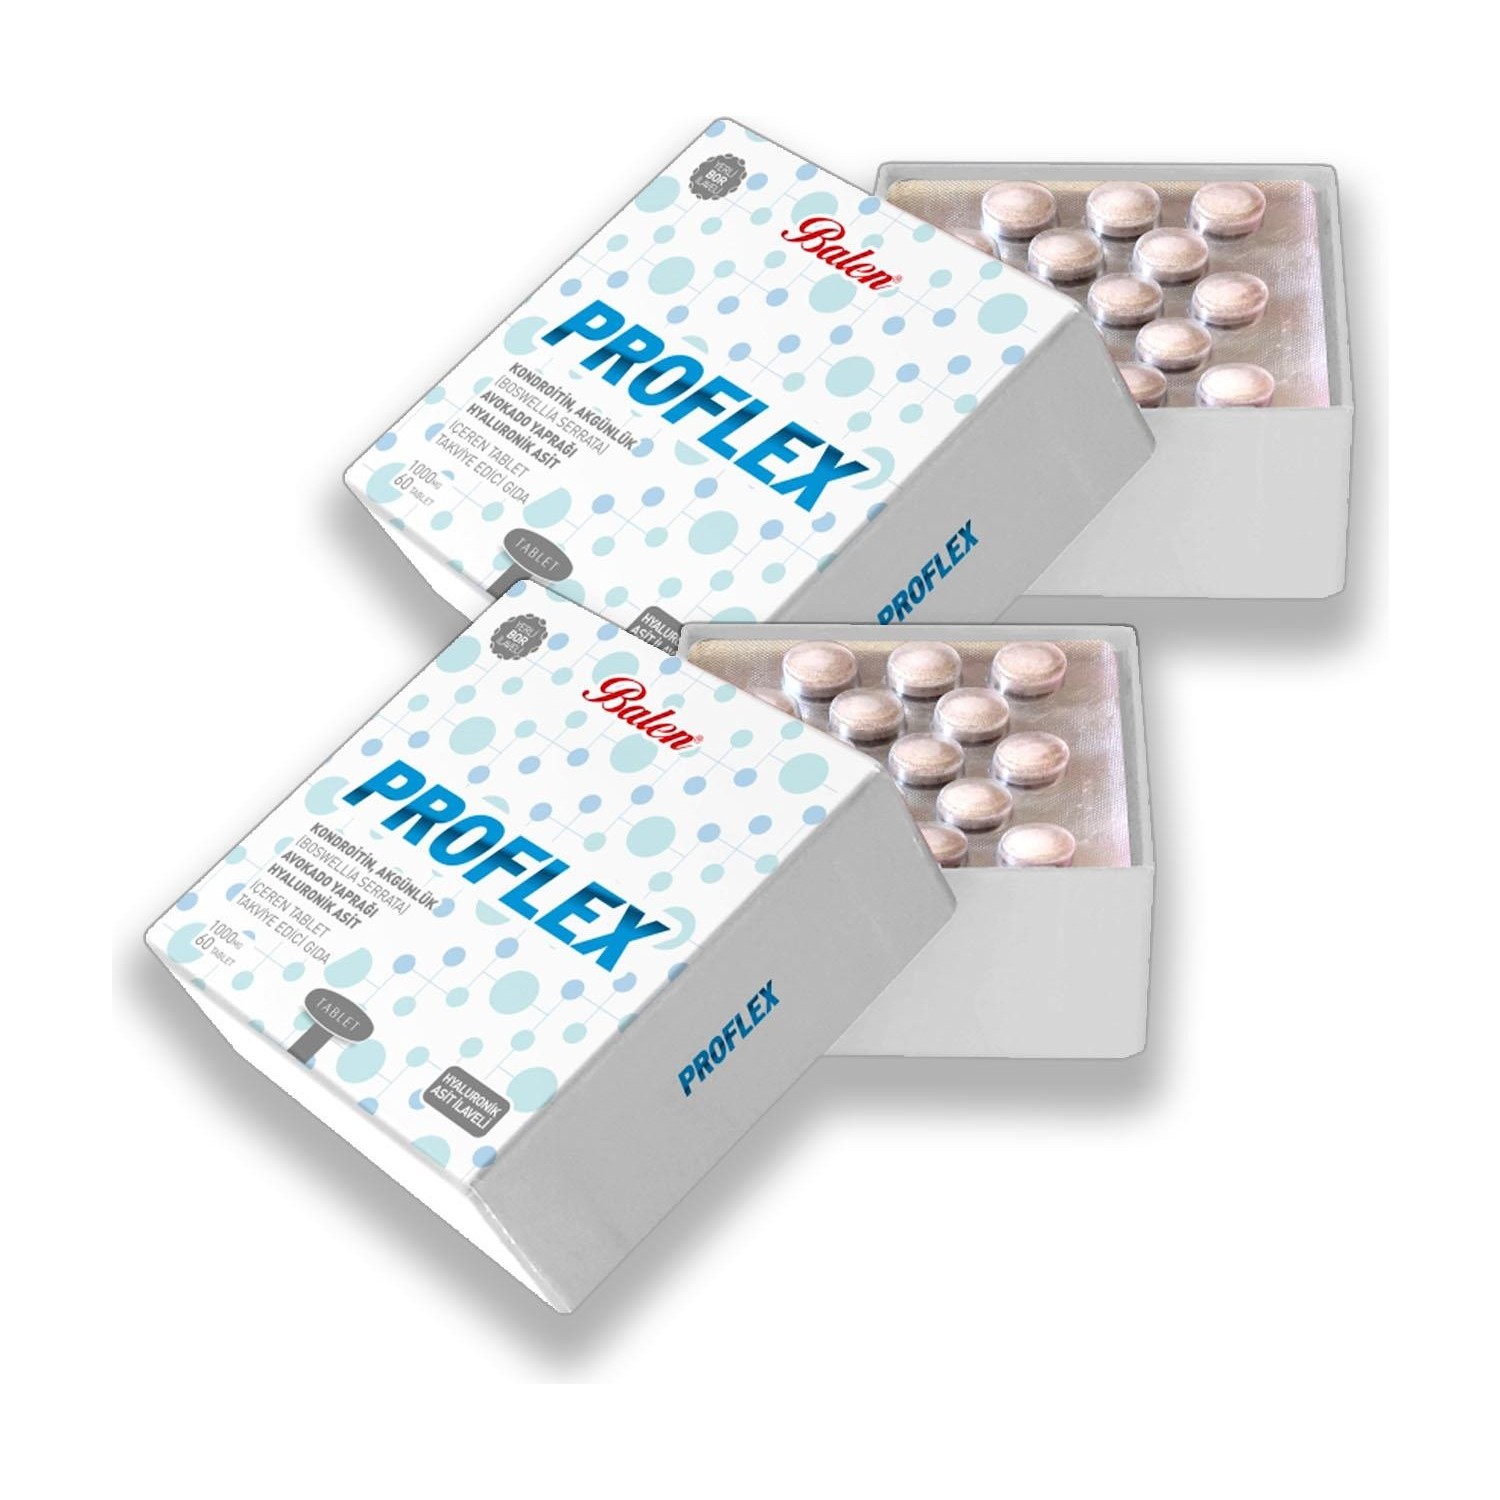 Пищевая добавка Balen Proflex 1000 мг, 2 упаковки по 60 таблеток пищевая добавка balen v5 1015 мг 60 таблеток